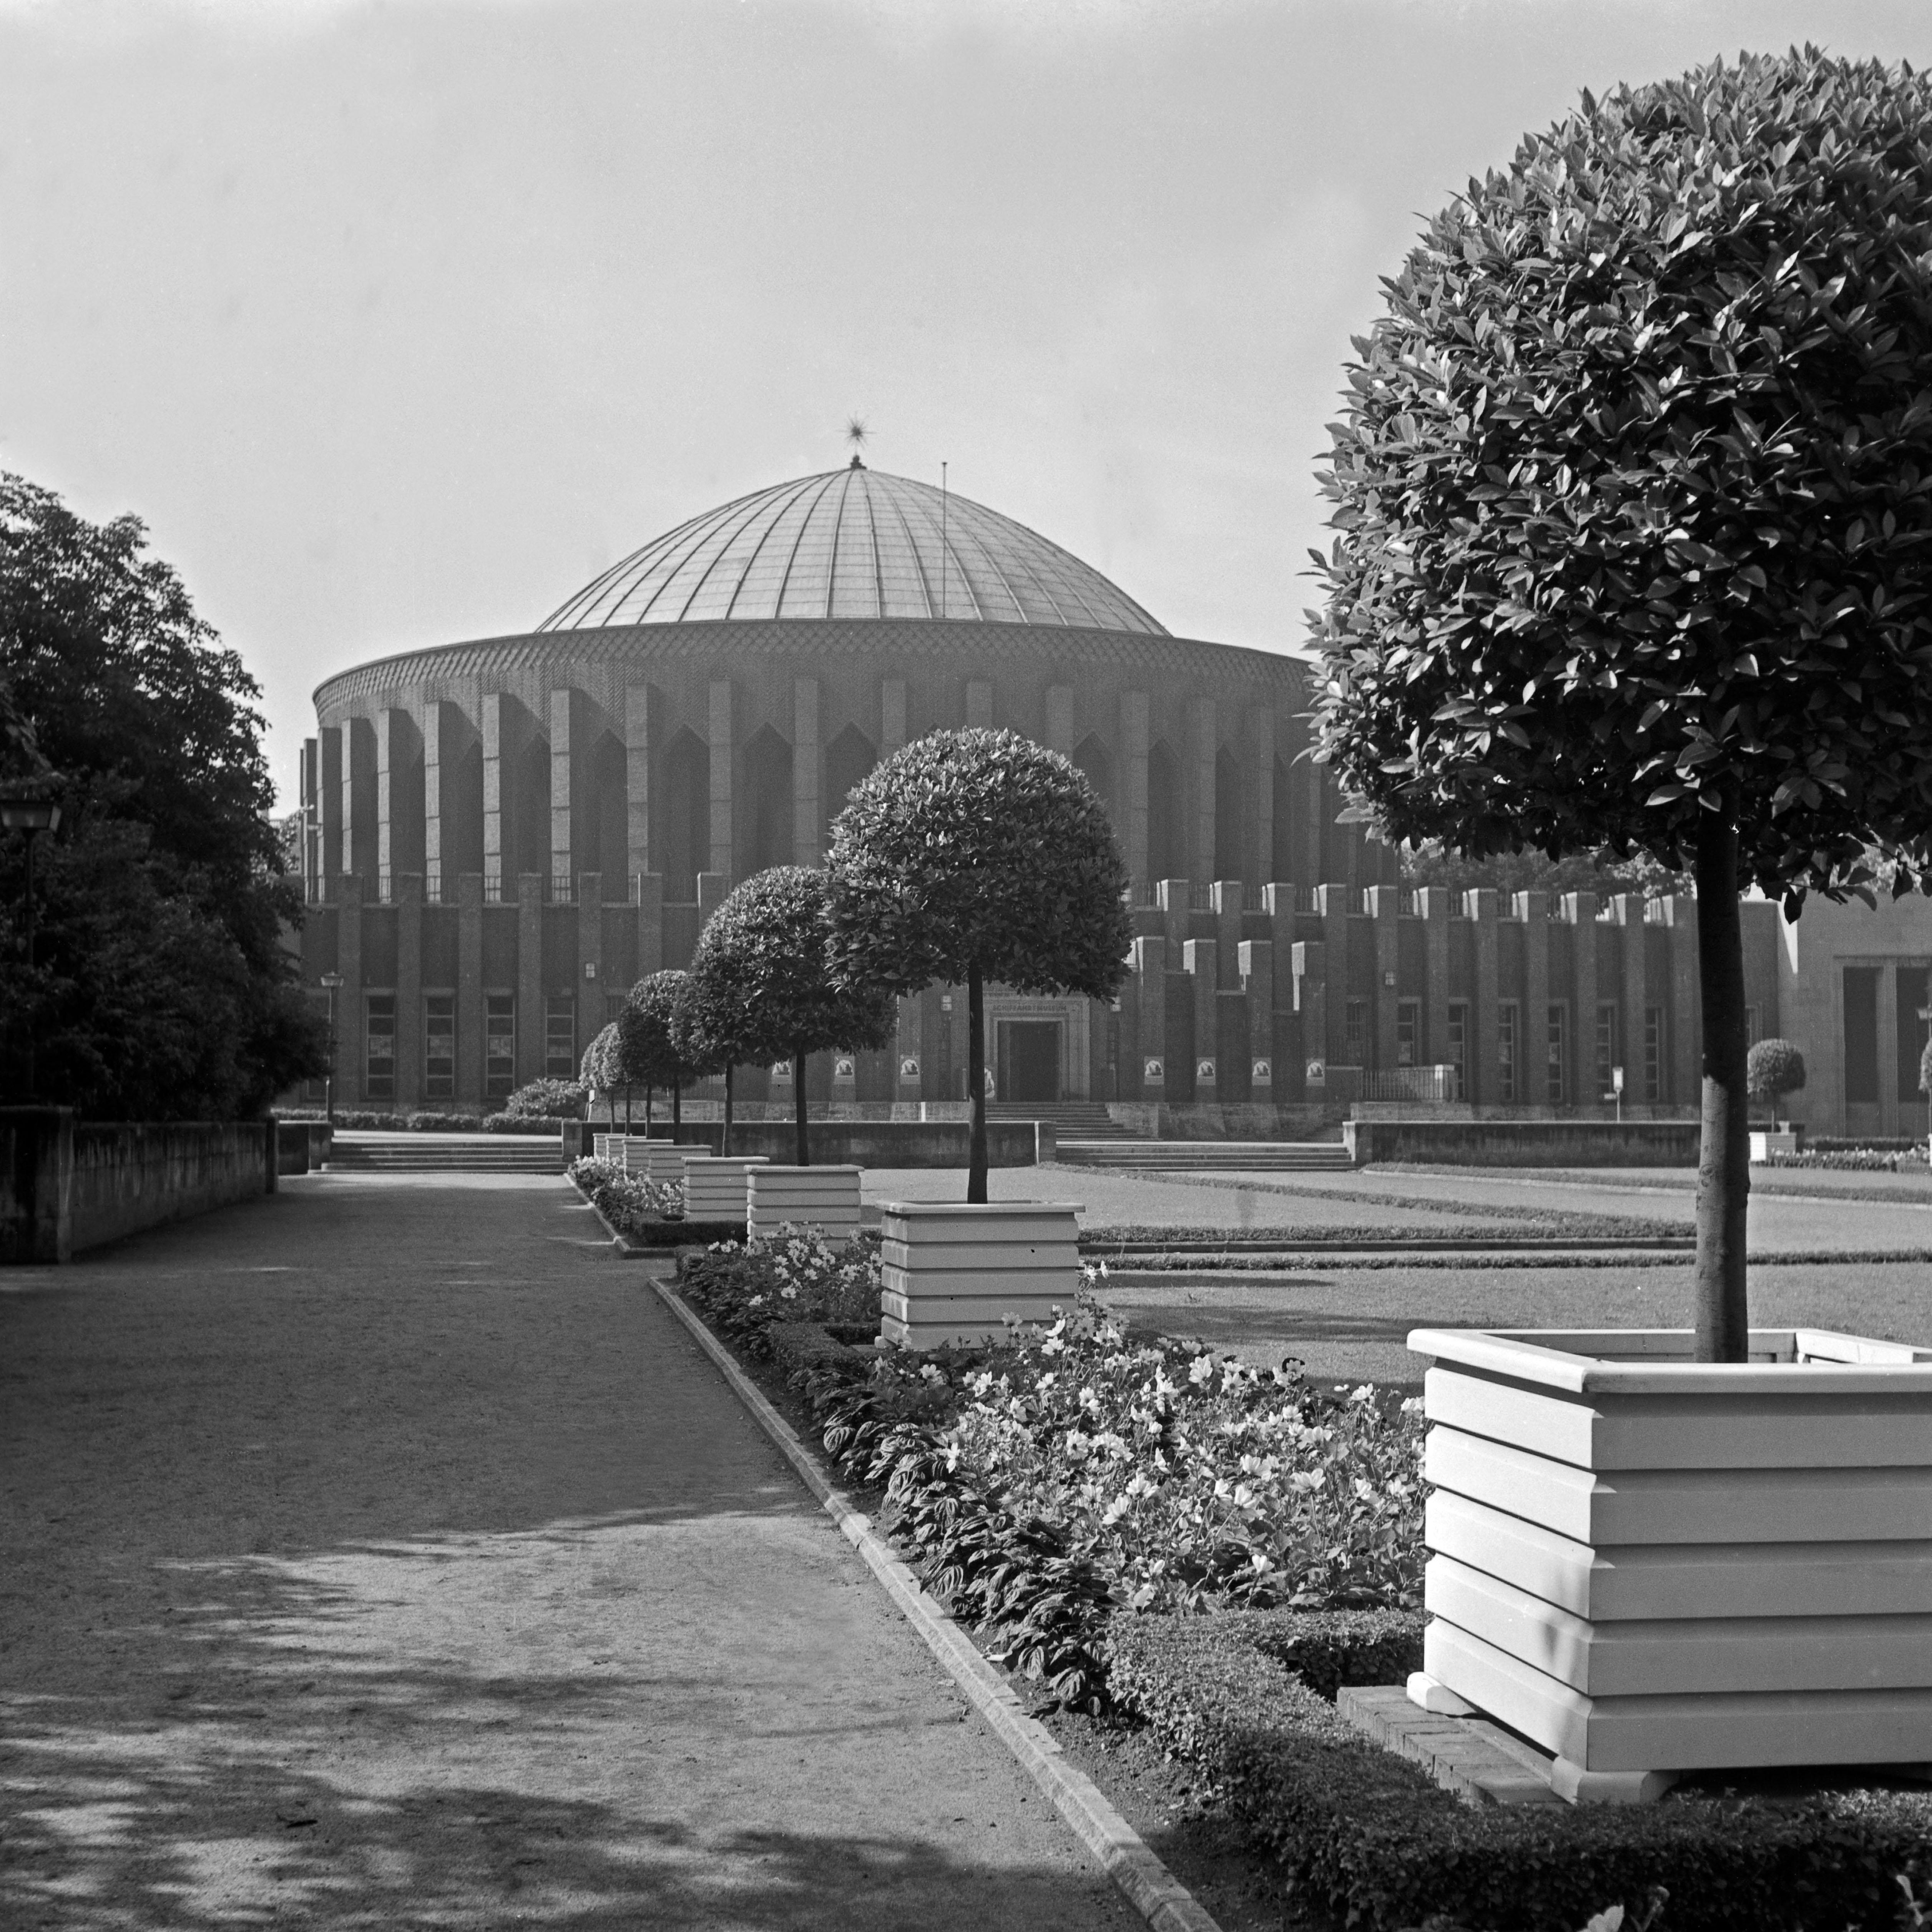 Black and White Photograph Karl Heinrich Lämmel - Duesseldorf planetarium and Shipping Museum, Allemagne 1937 Imprimé plus tard 